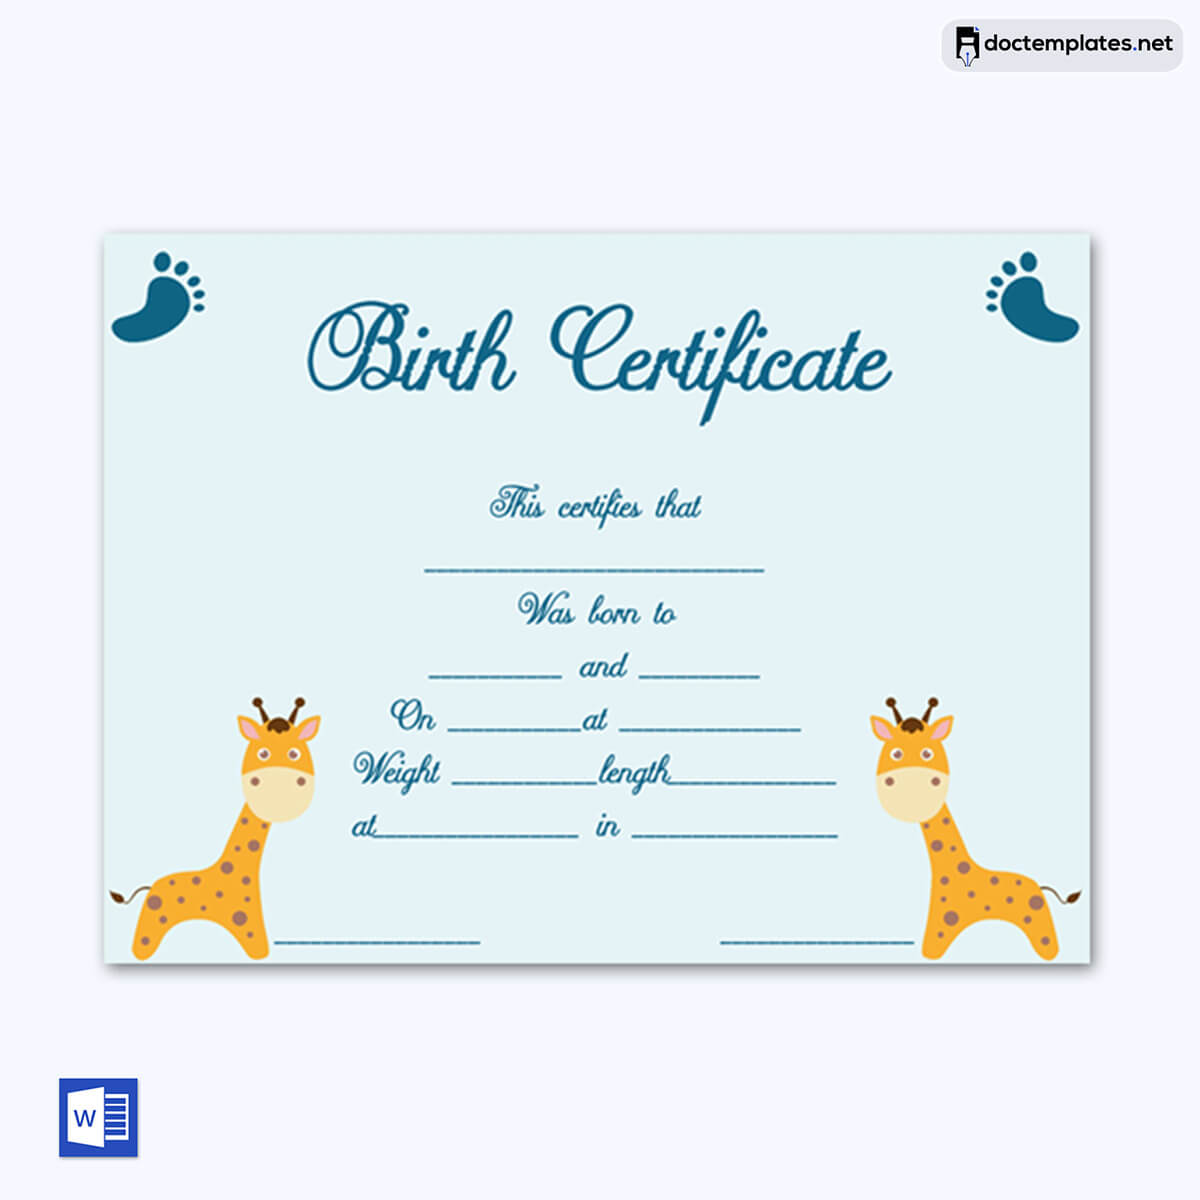 
birth certificate template google docs 05